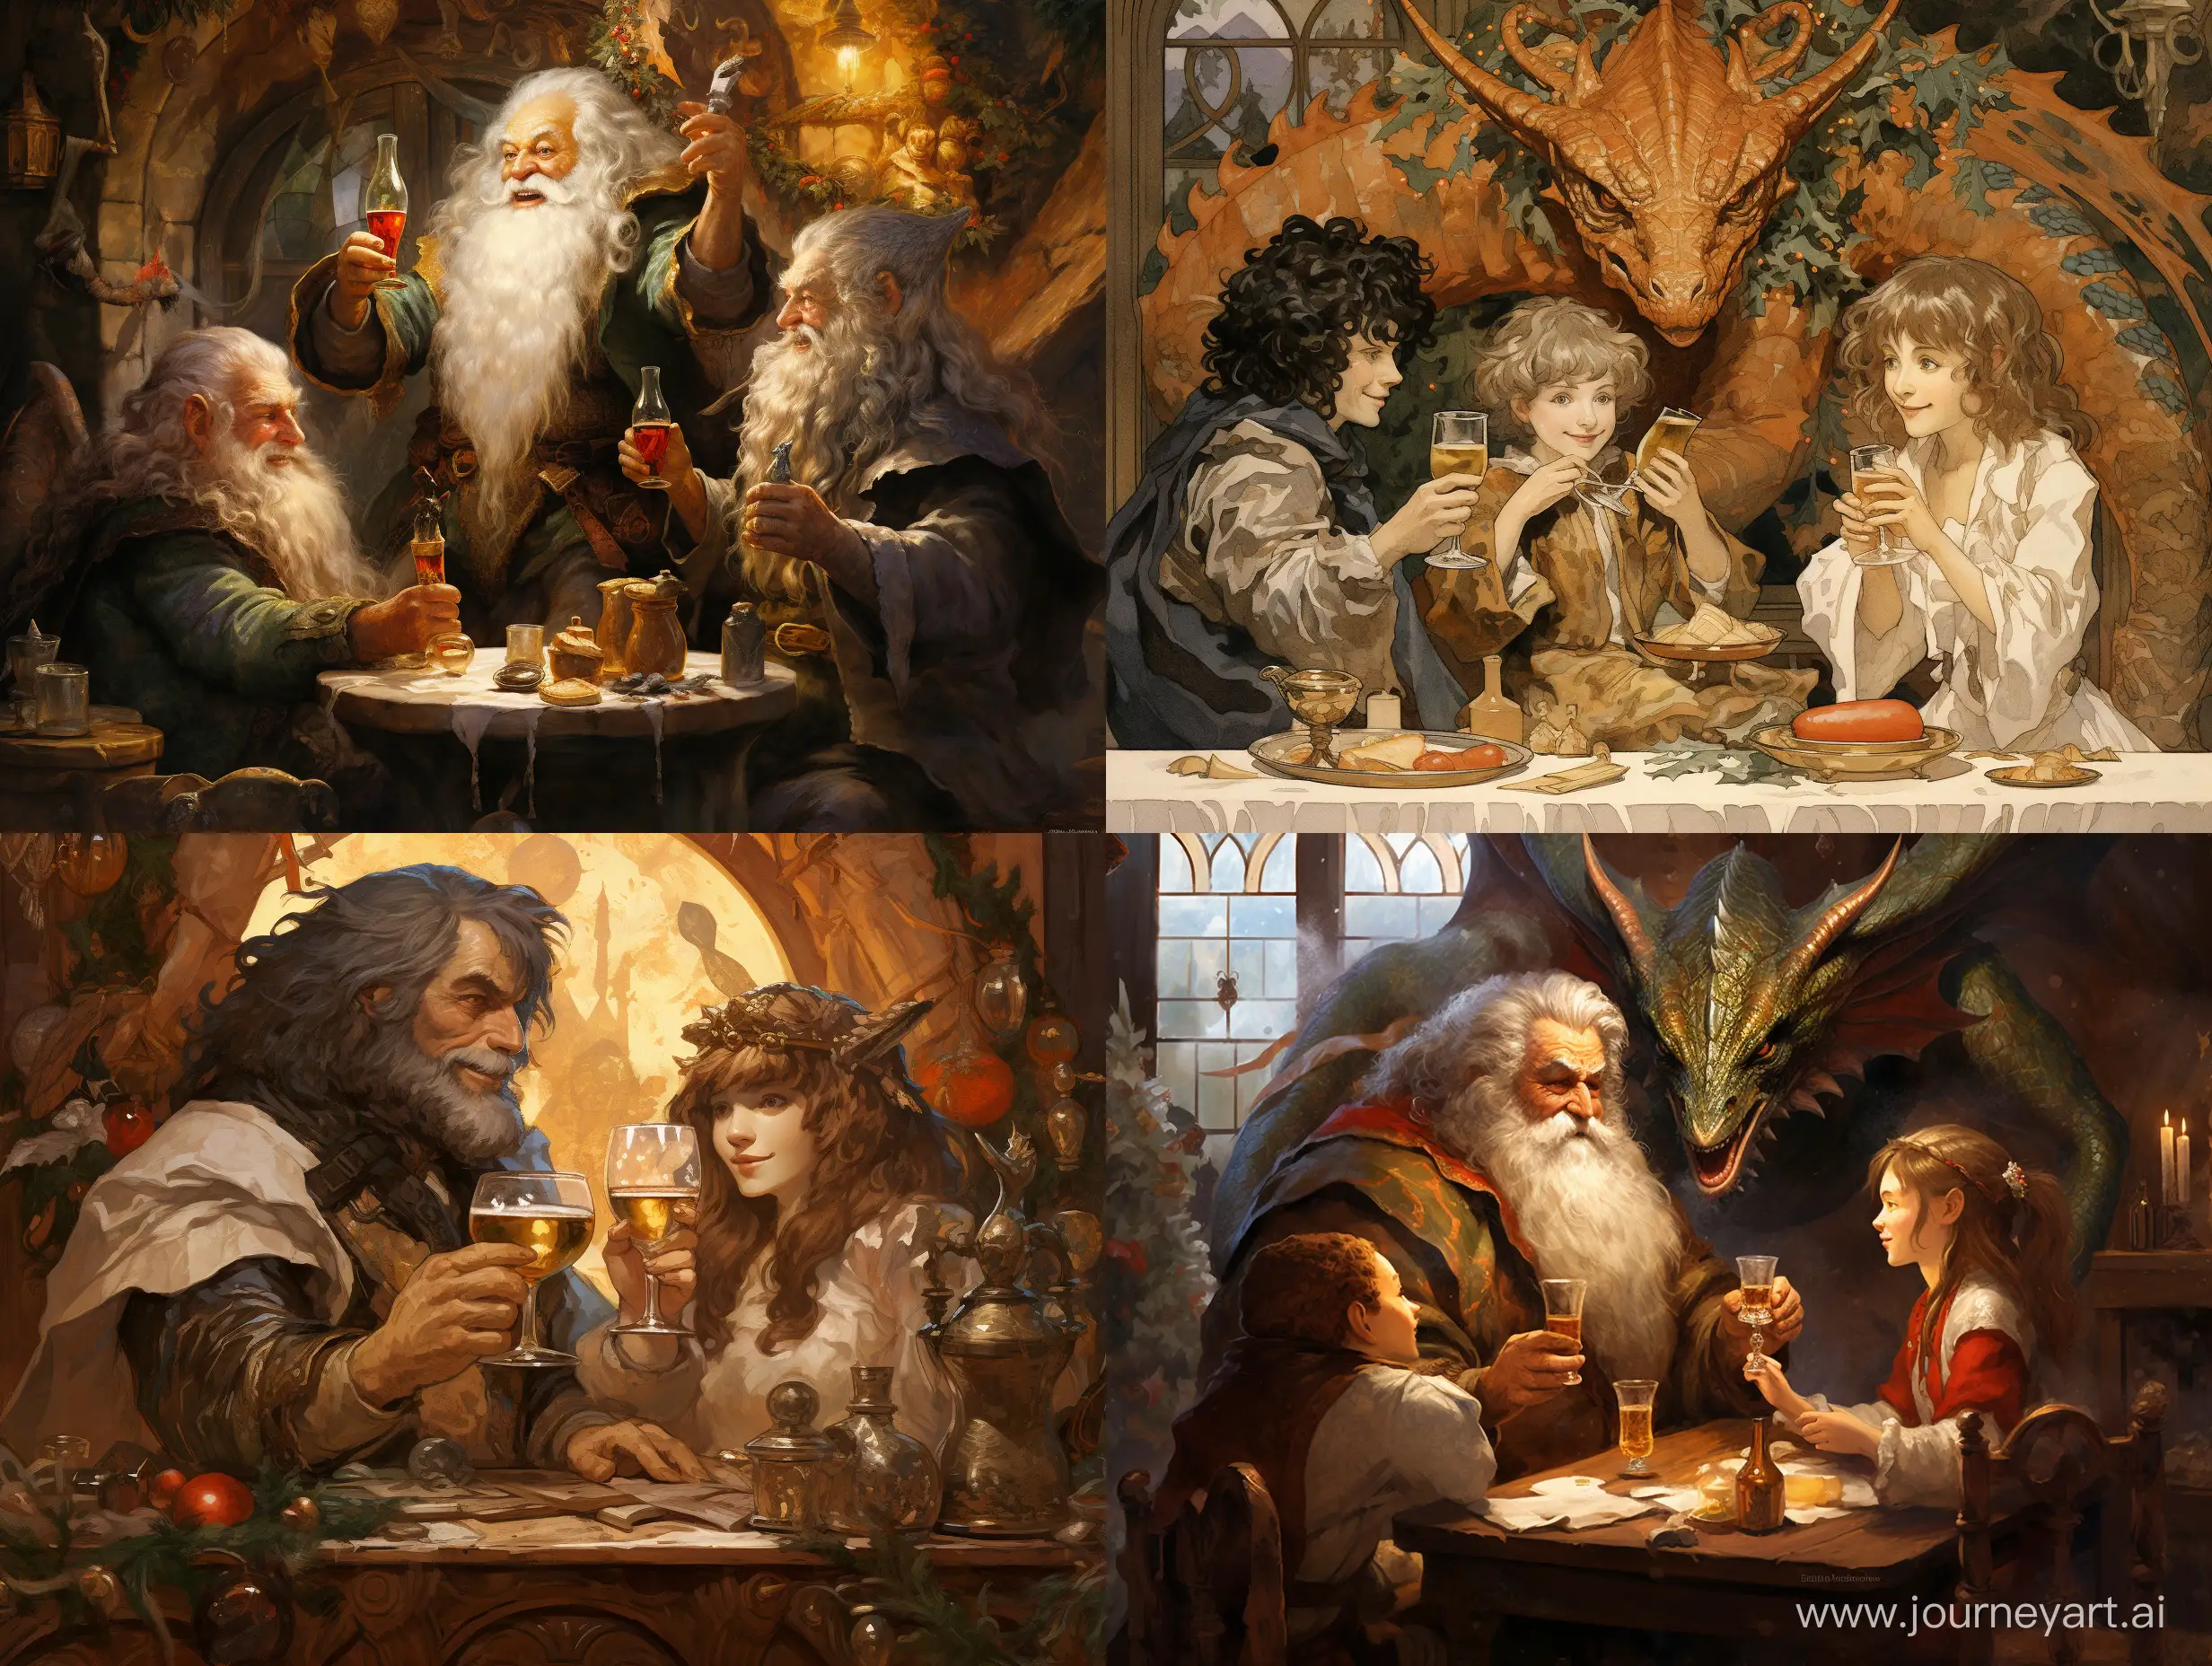 Fantasy-Creatures-New-Year-Celebration-Hobbit-Dwarf-Elf-and-Dragon-Toasting-Near-the-Festive-Tree